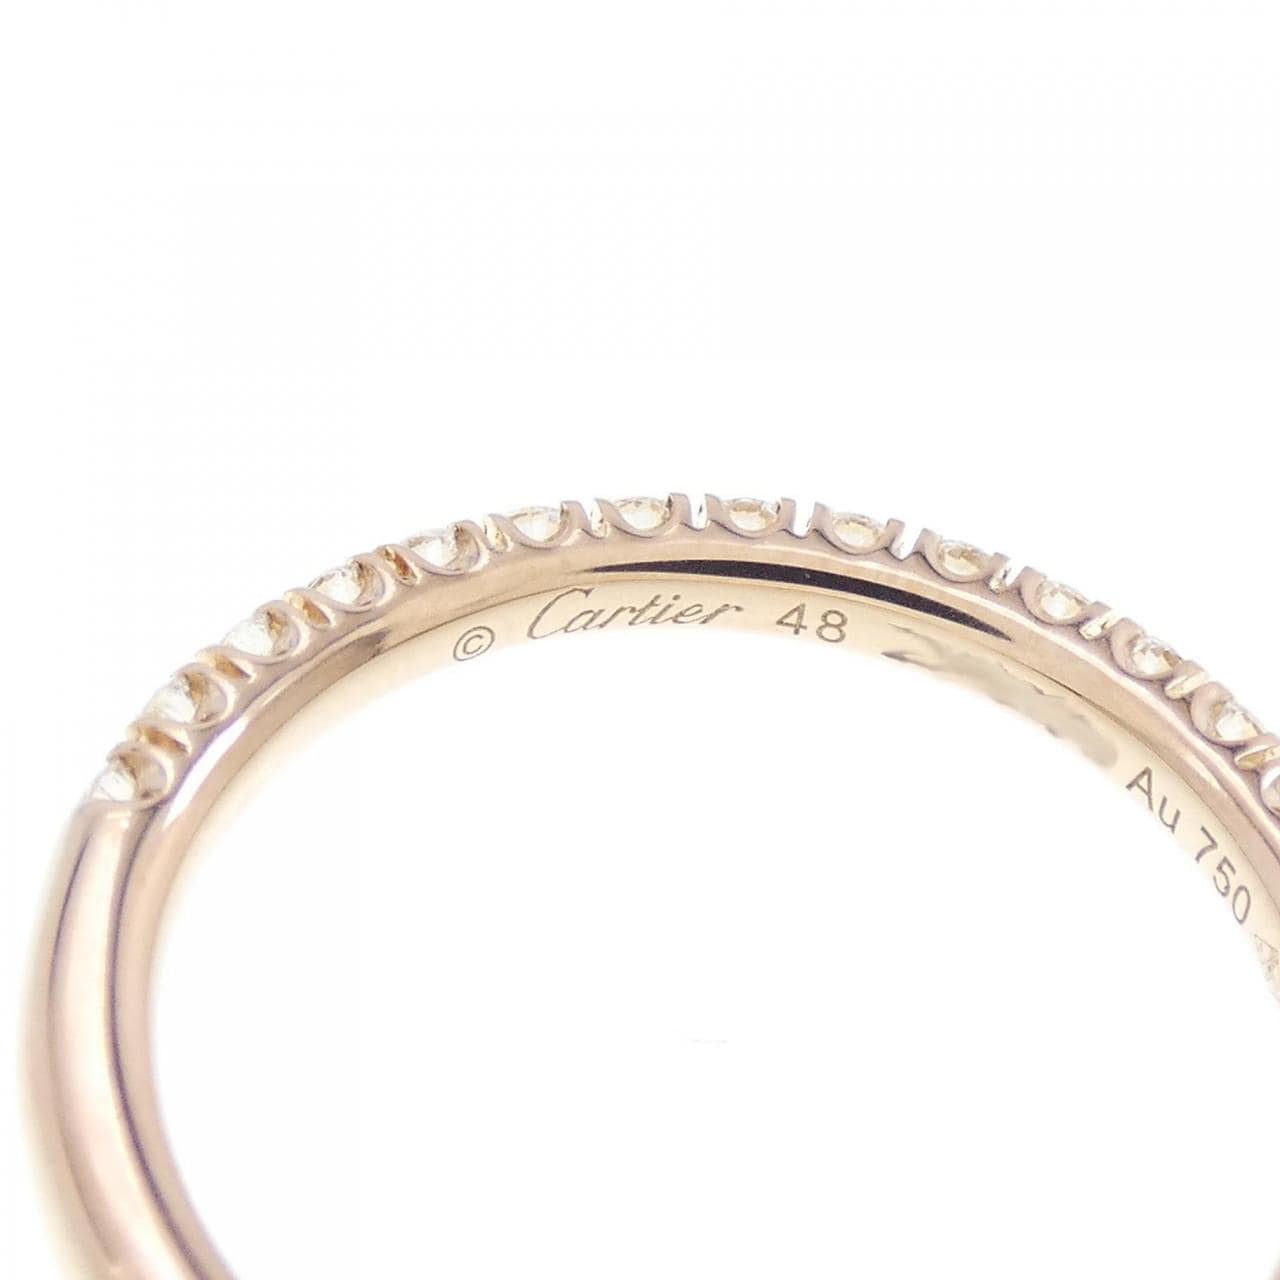 Cartier etancel ring